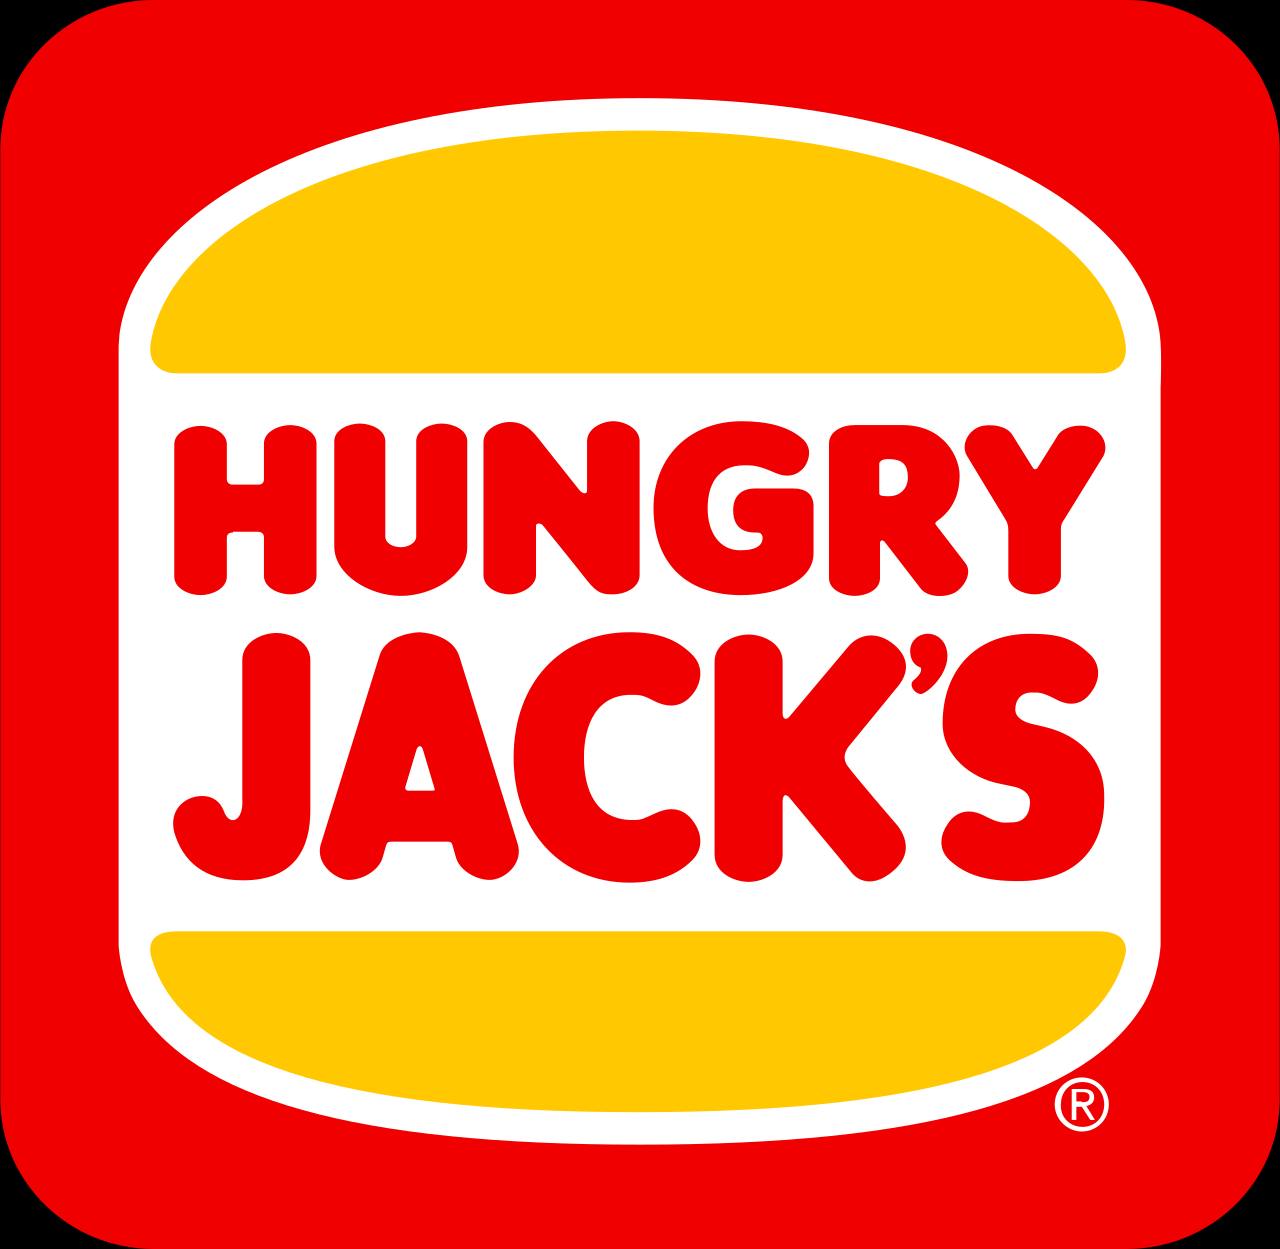 Hungry Jacks vs Burger King